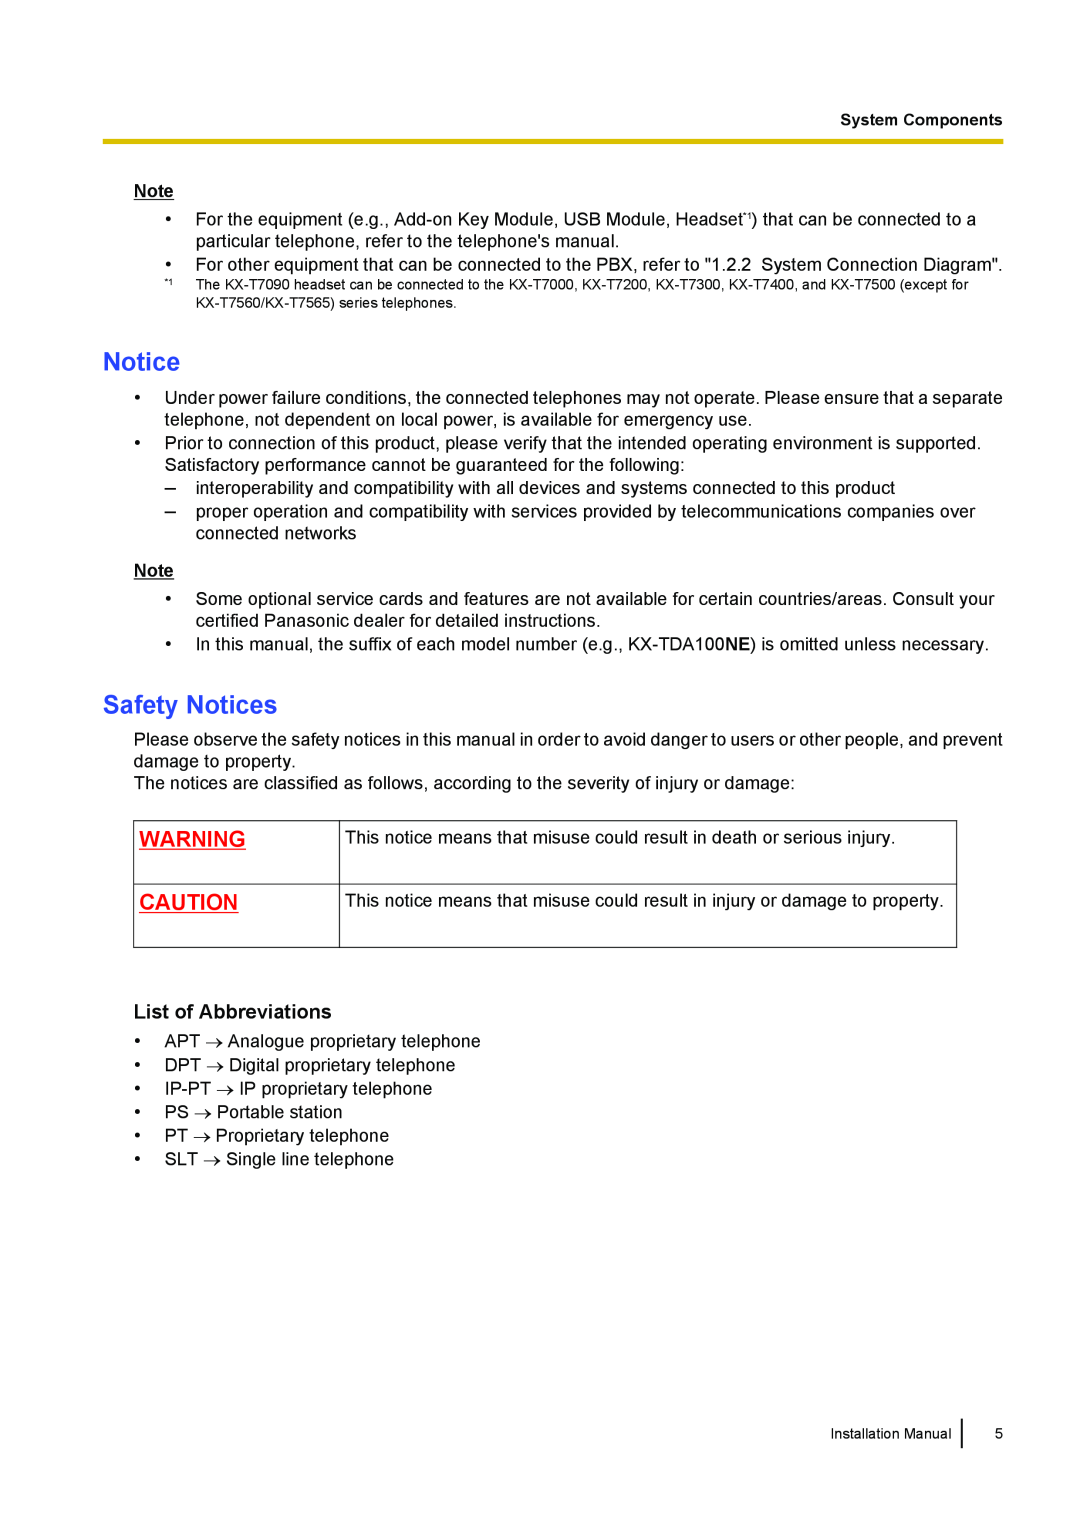 Panasonic KX-TDA100 installation manual Safety Notices, List of Abbreviations 